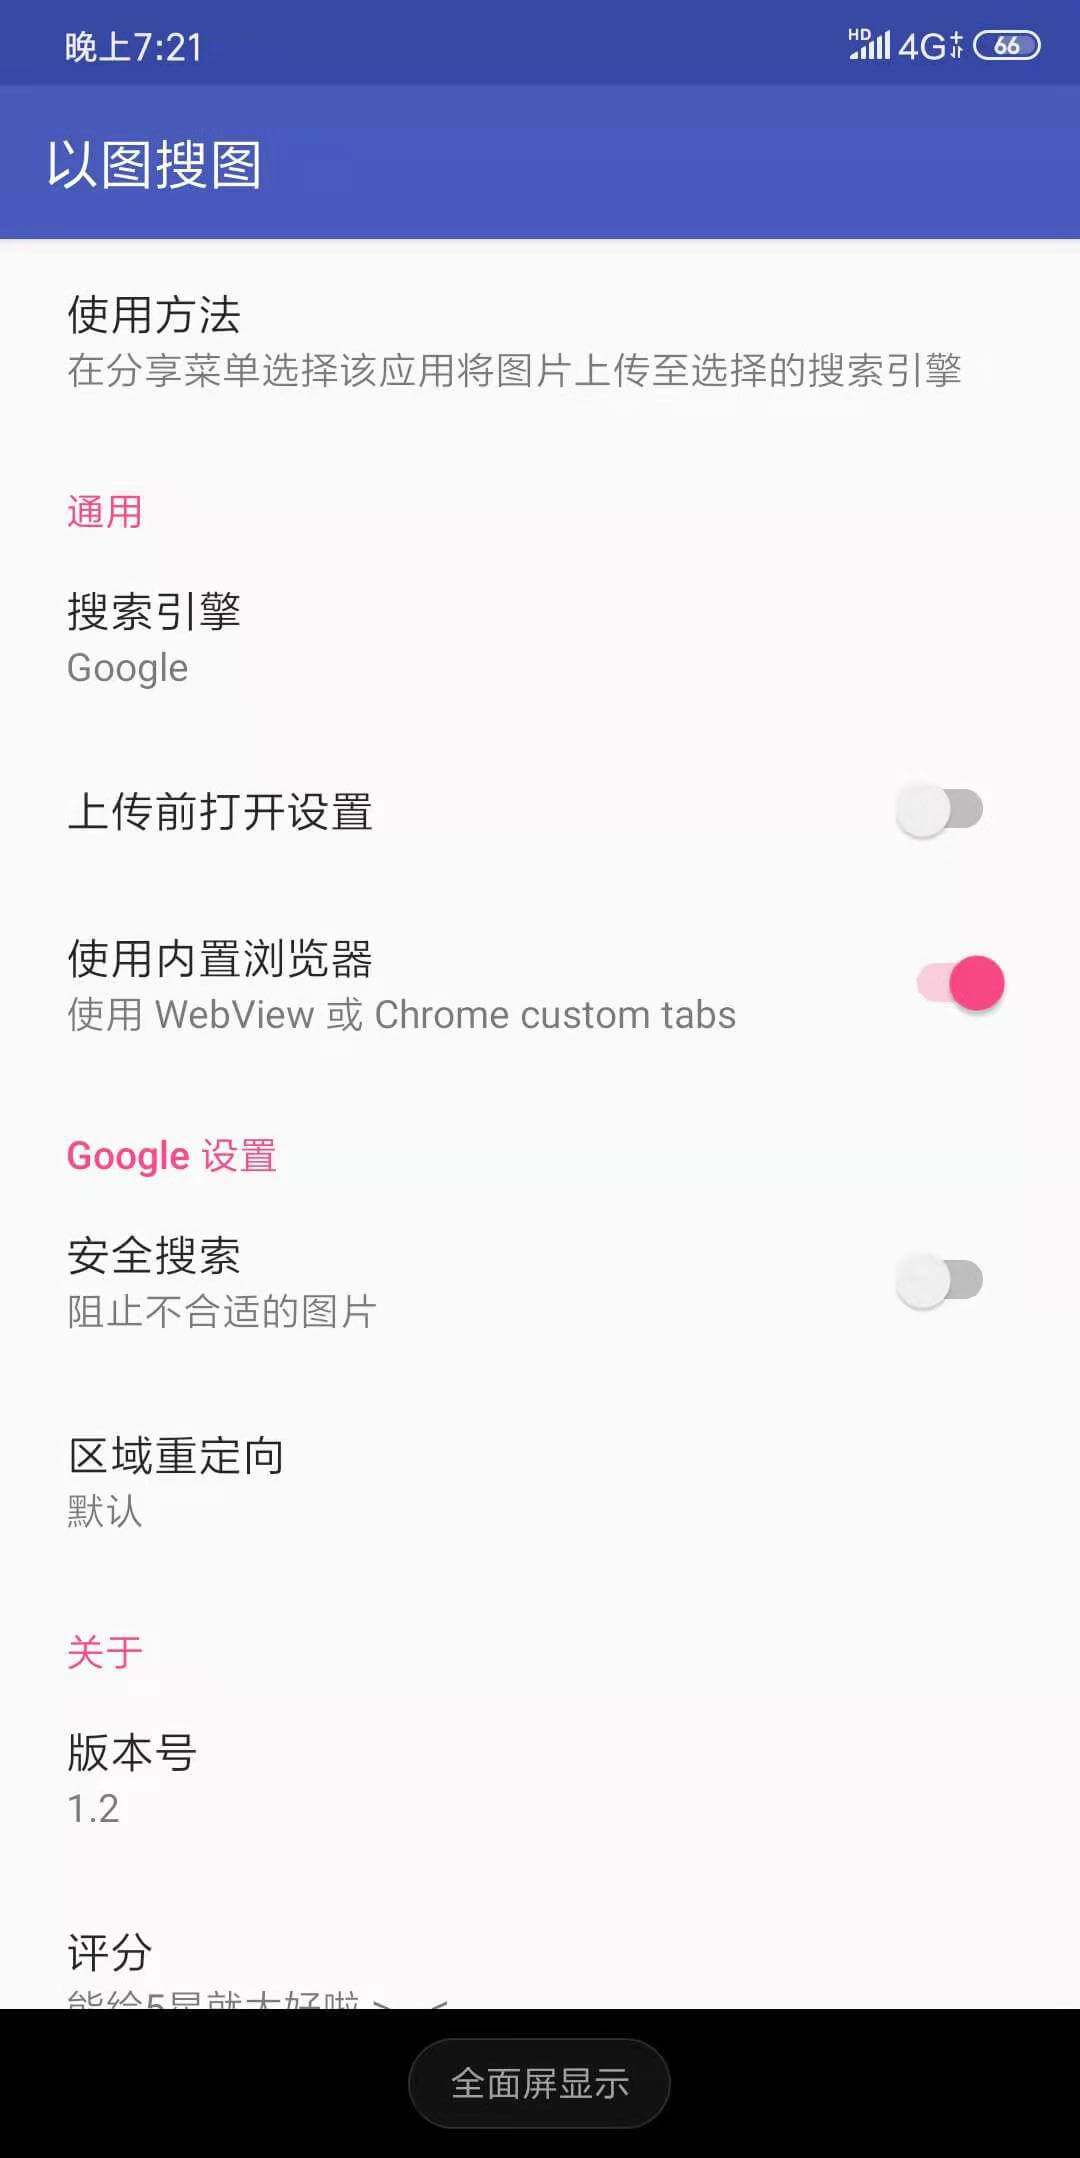 EdgeView 3 for Mac(苹果Mac电脑图片查看软件)中文